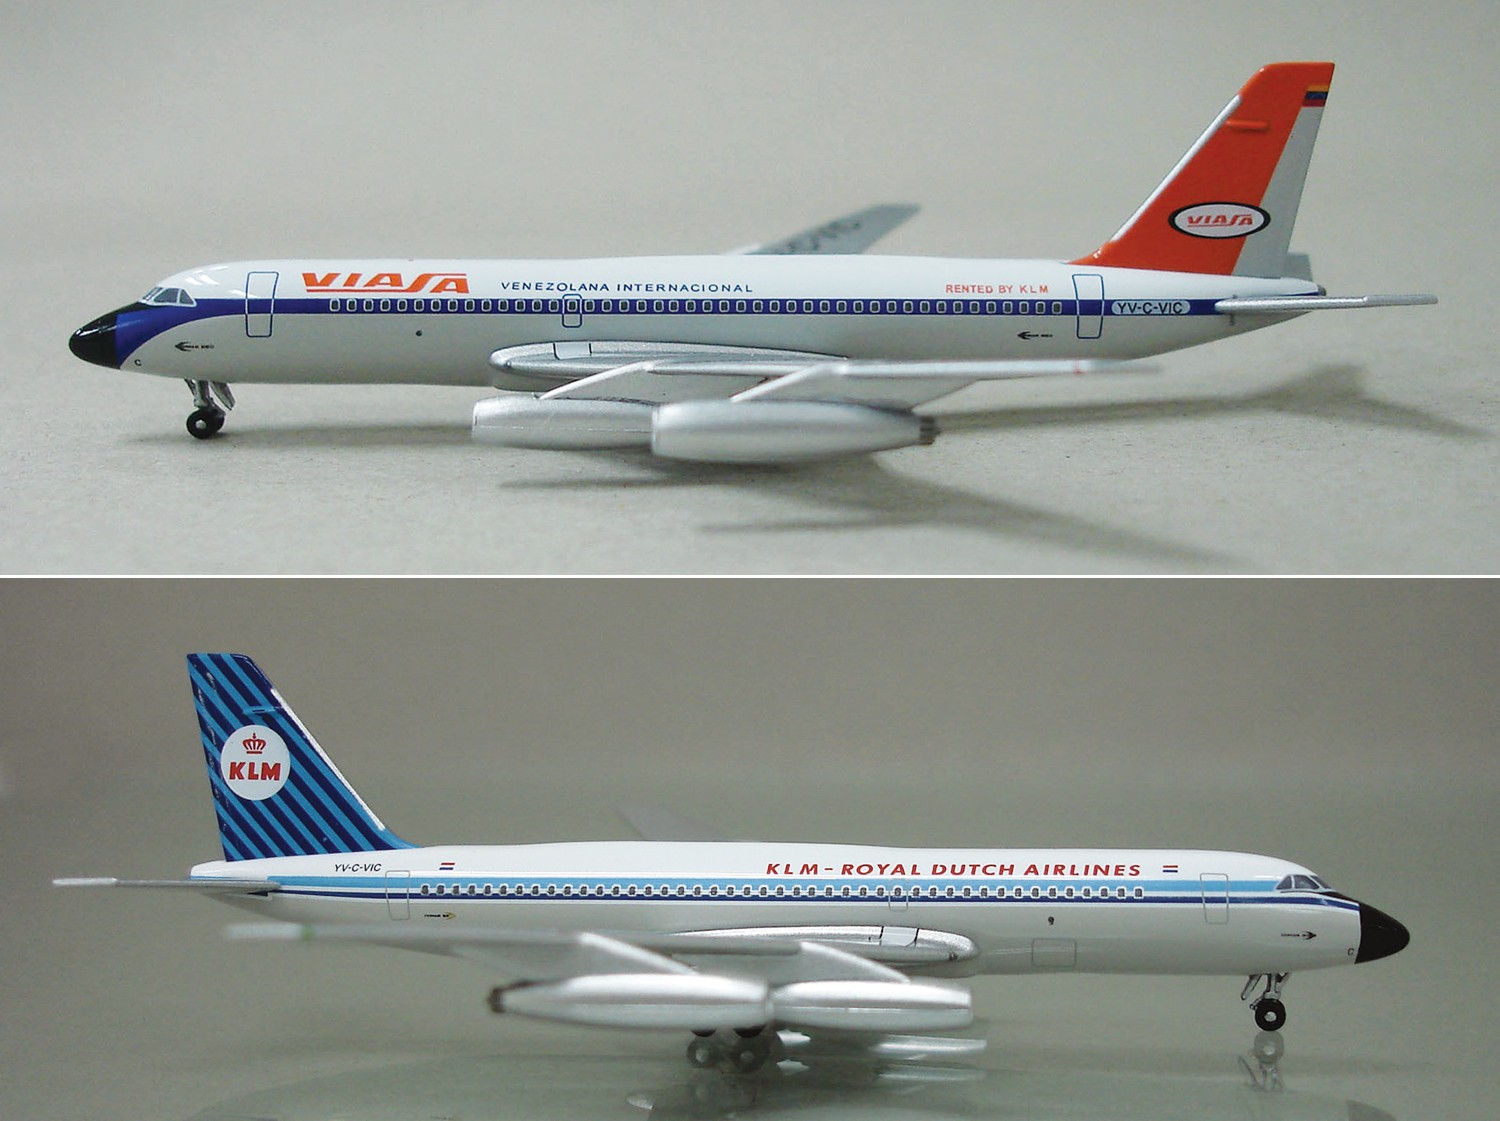 KLM Viasa Convair 880 YV-C-VIC Apollo Scale 1:400 Diecast models A13042 